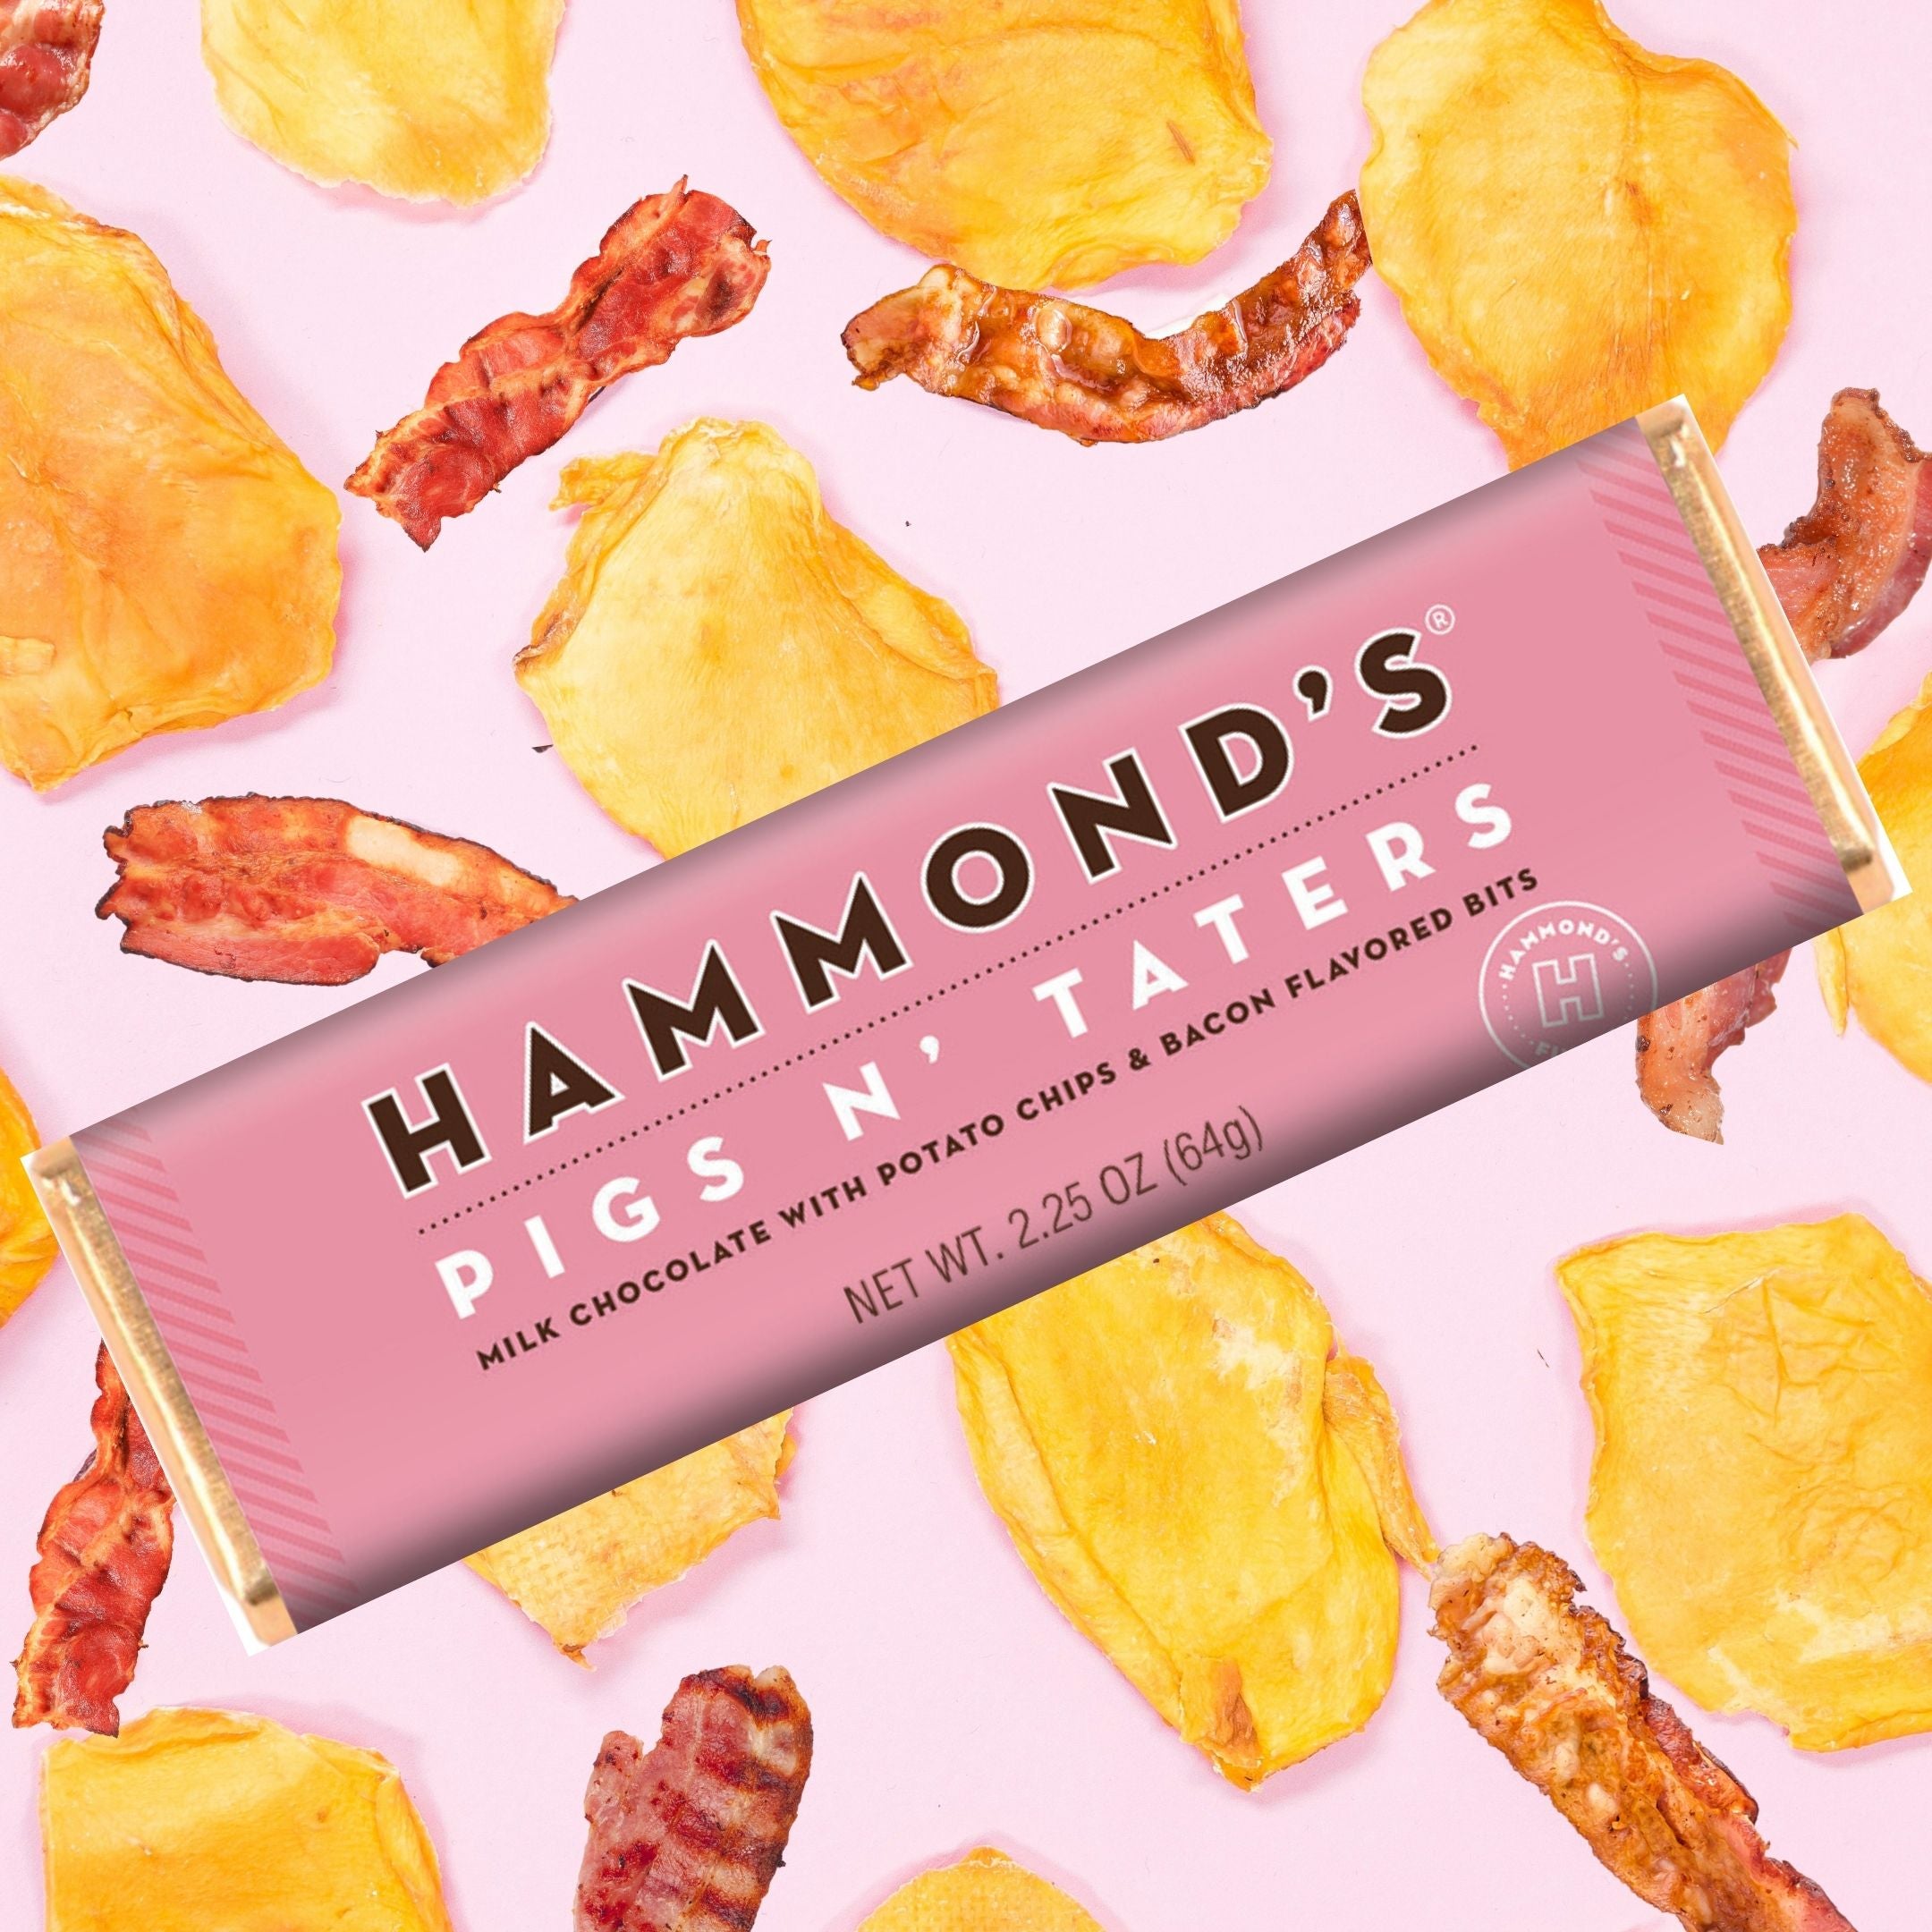 Hammond's Chocolate Bar 5-Pack